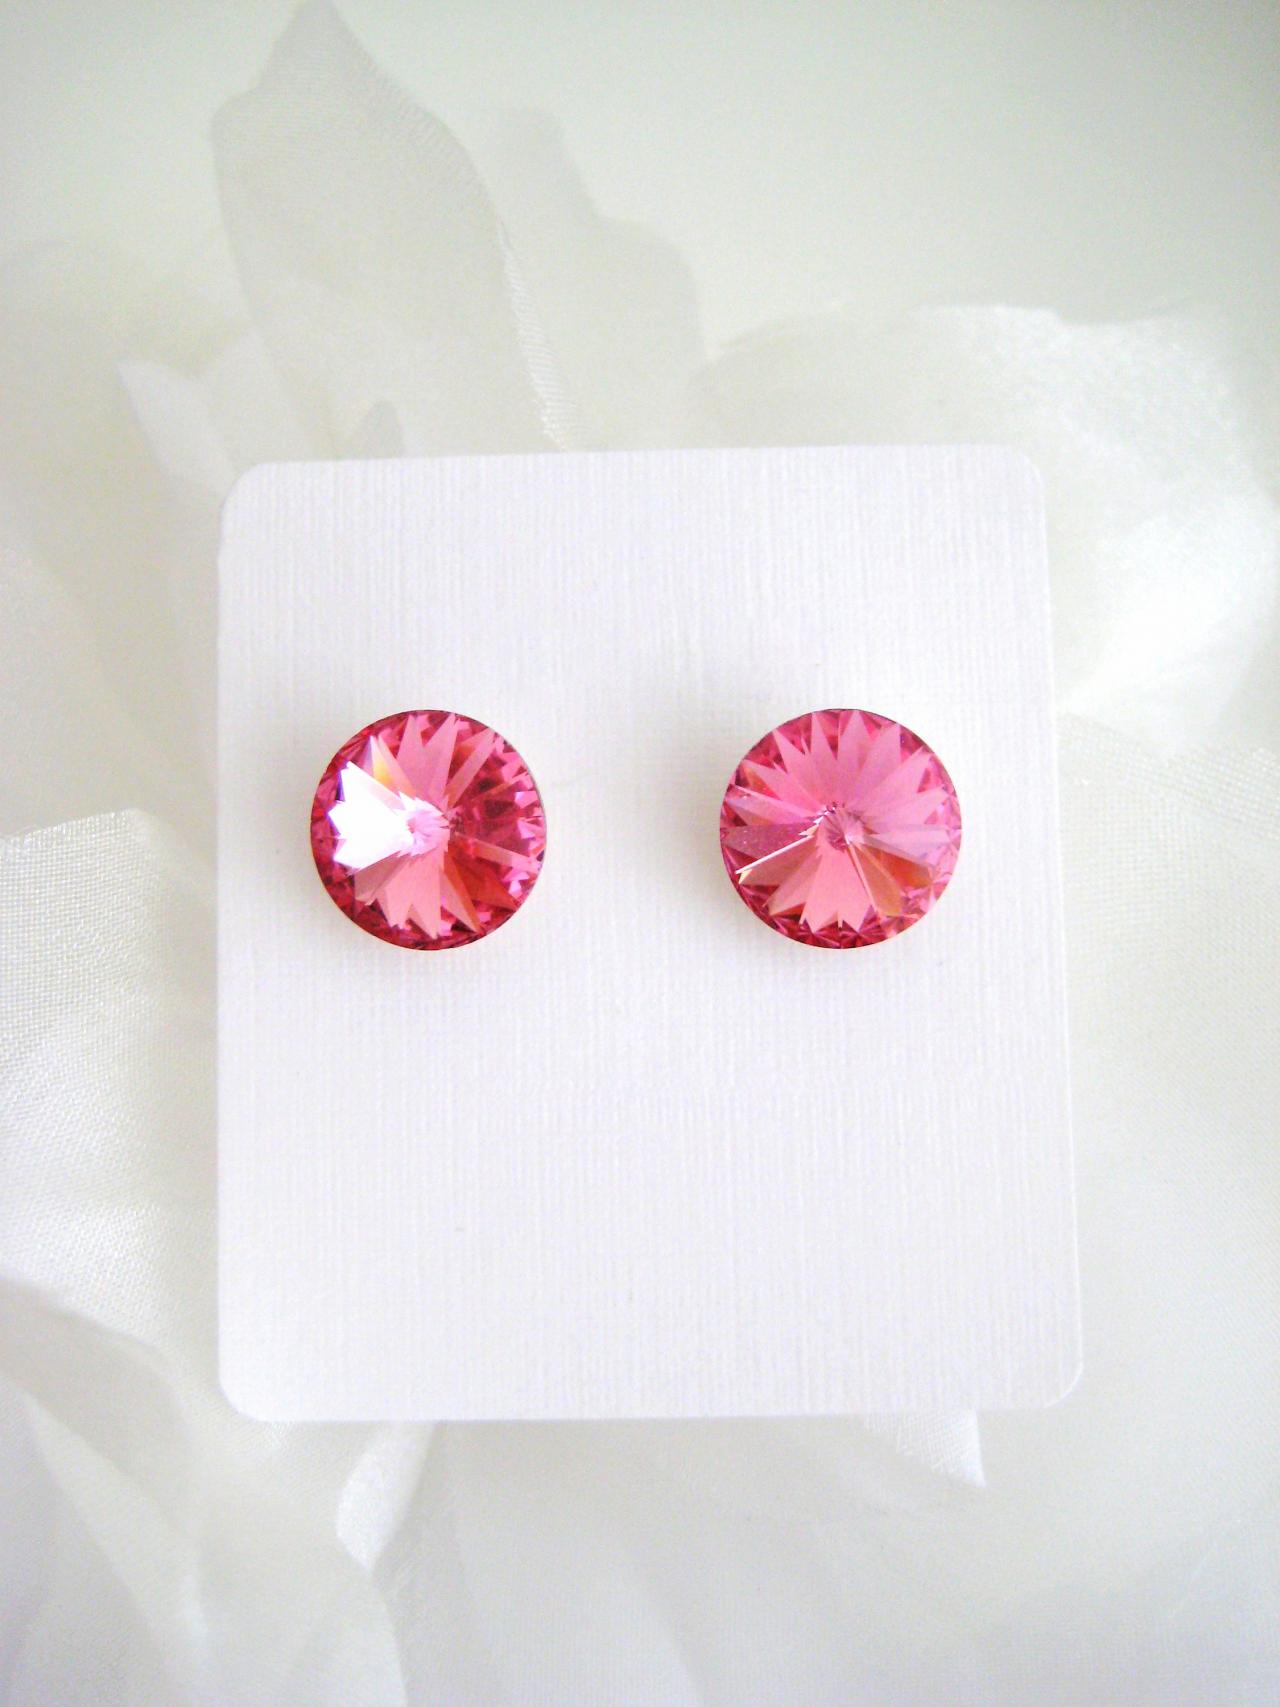 Ruby Pink Crystal Stud Earrings Swarovski 12mm Crystal Pink Wedding Earrings Bridesmaid Gift Valentine's Day Gift Birthday Gift (e314)